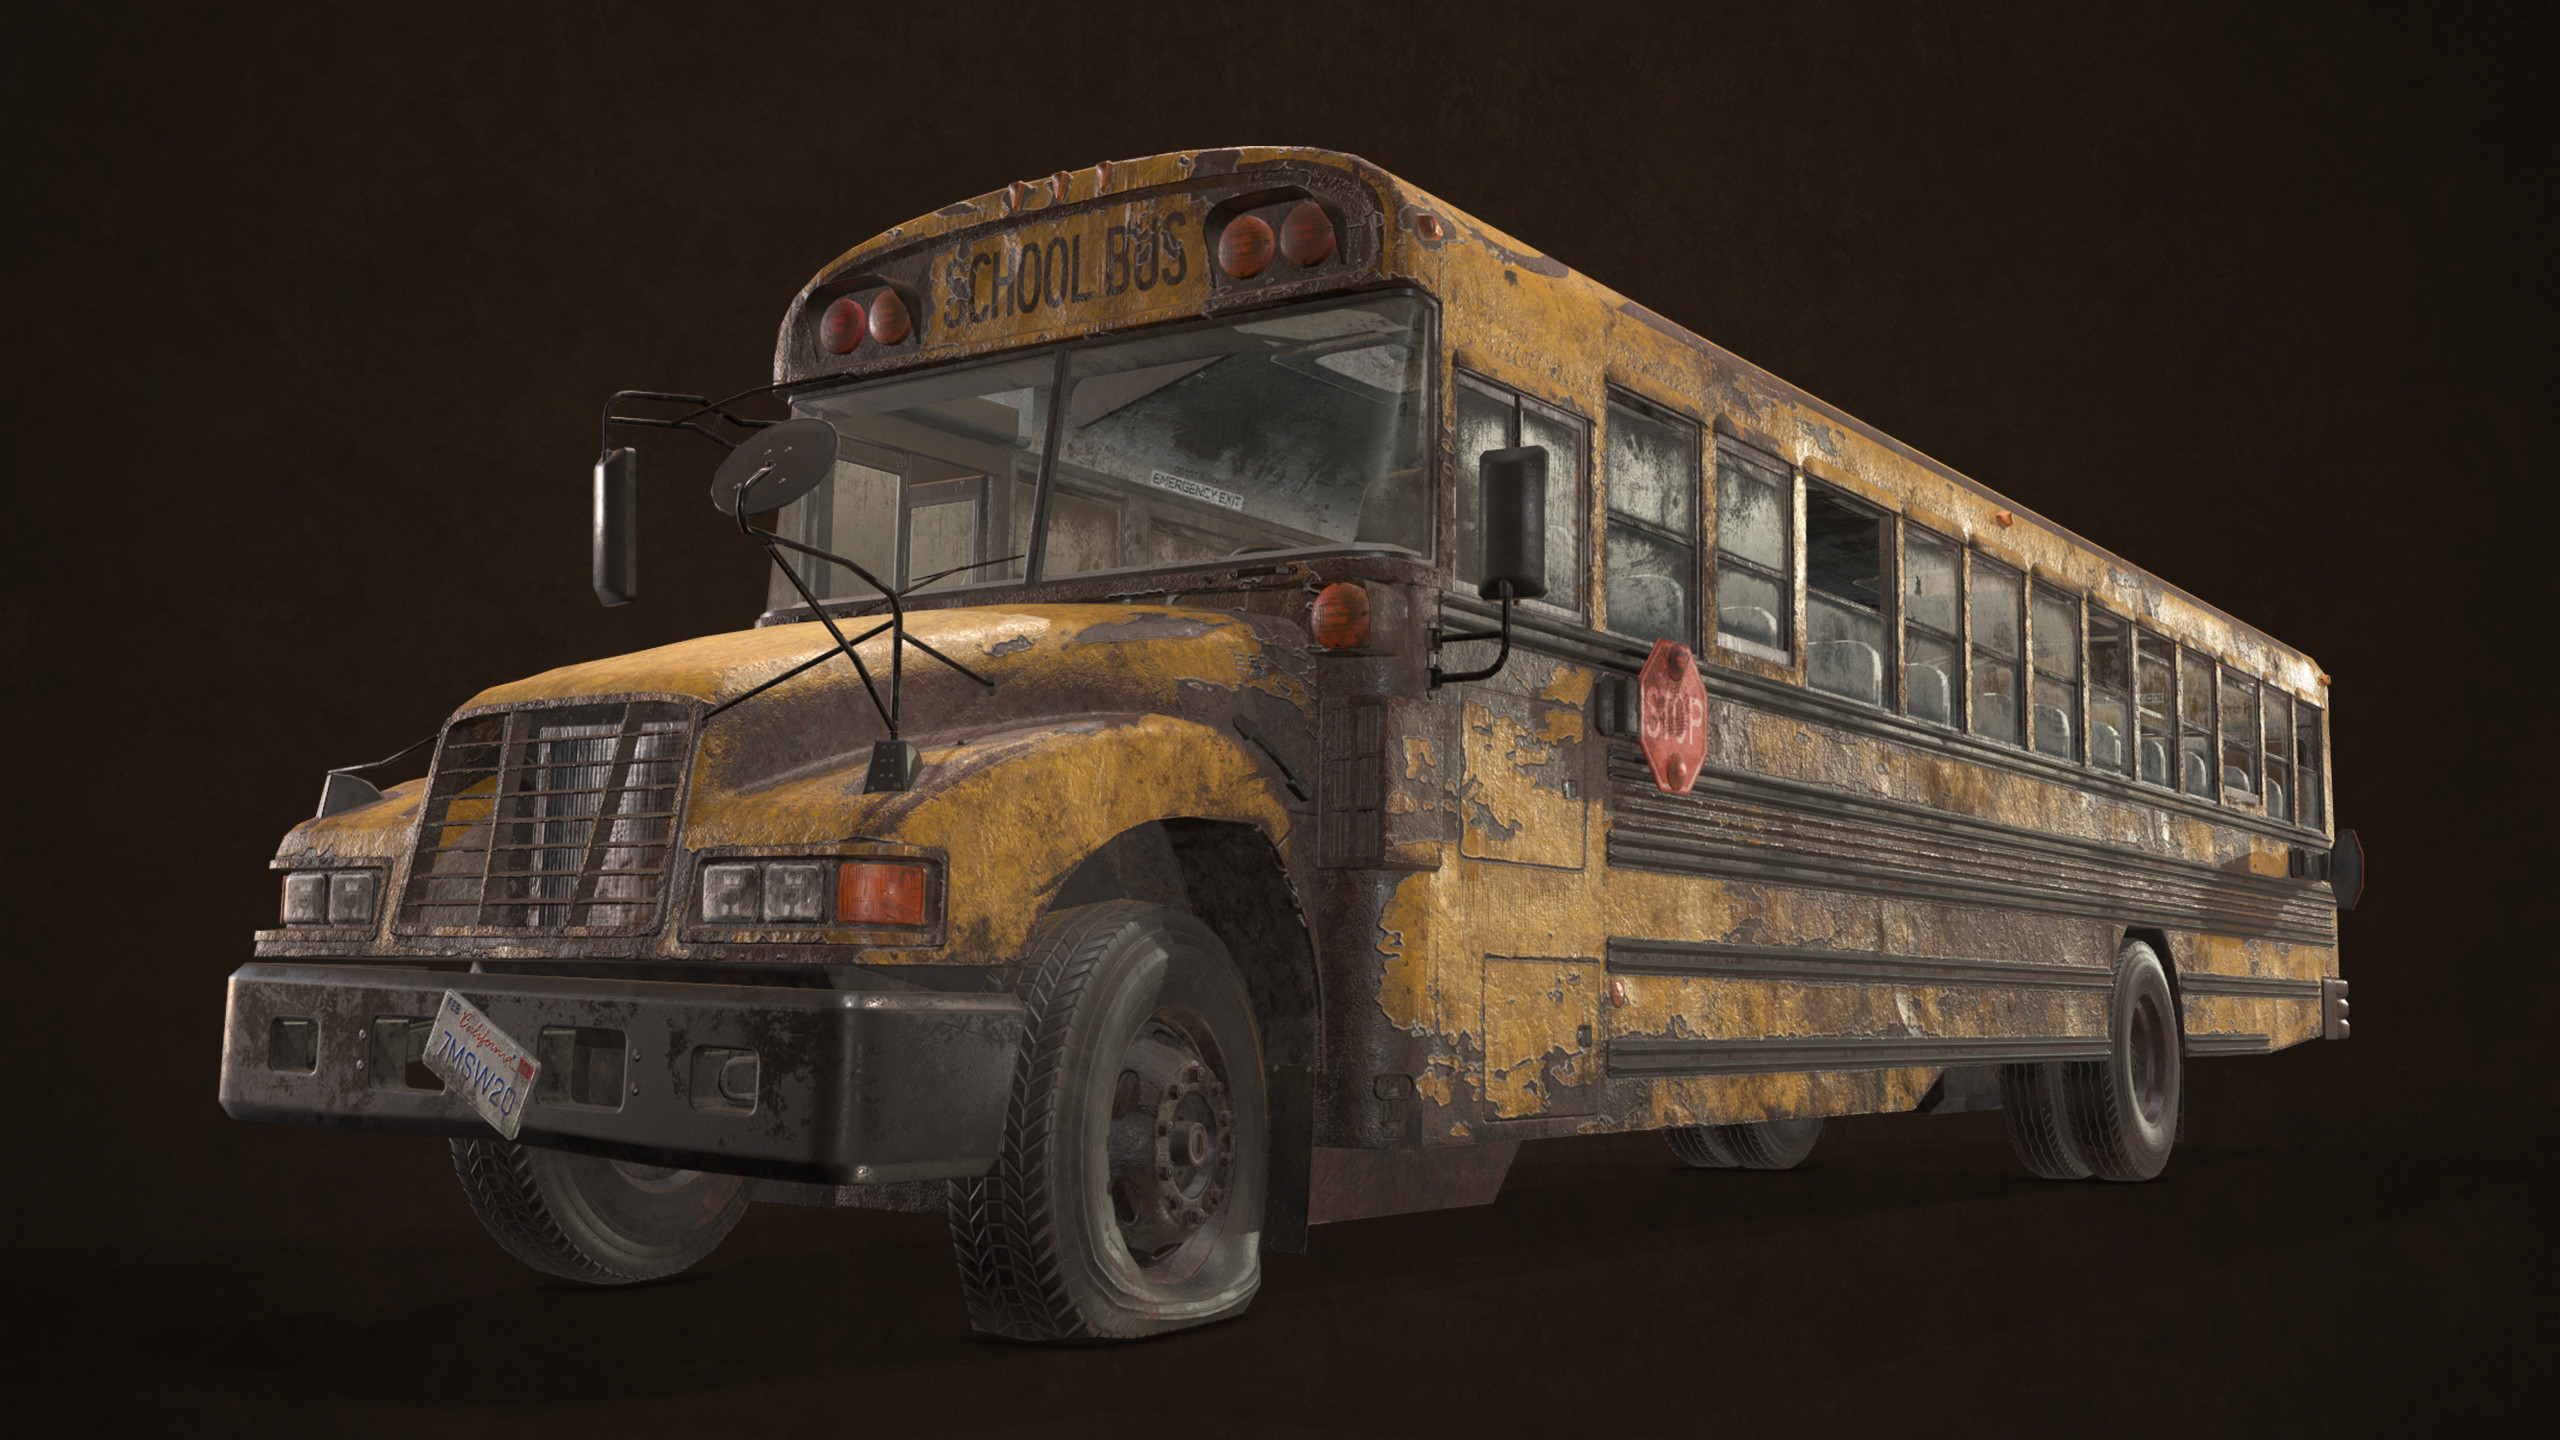 2560x1440 ArtStation Abandoned School Bus